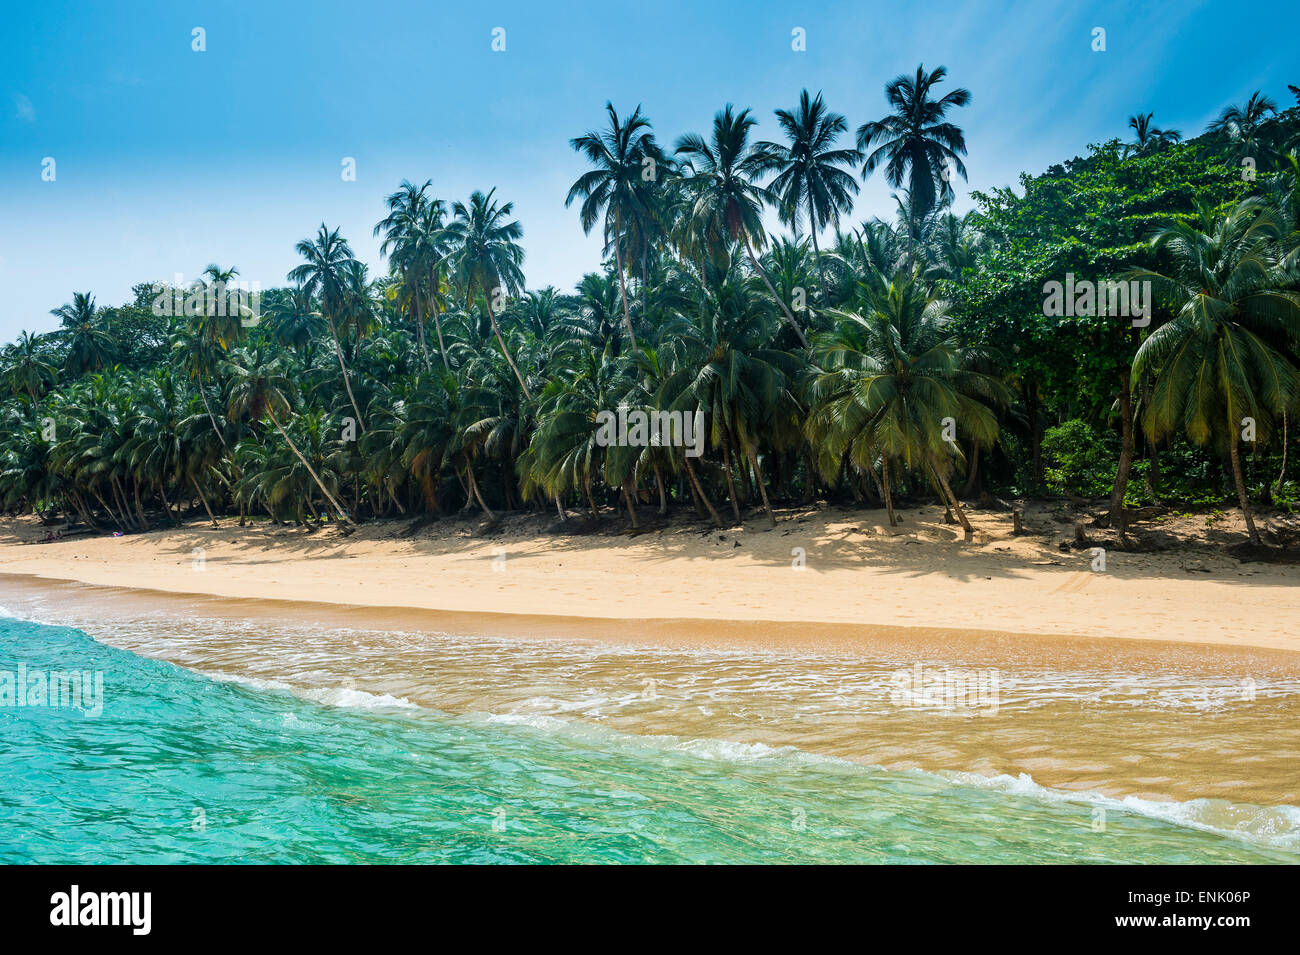 Remote tropical beach on the UNESCO Biosphere Reserve Principe, Sao Tome and Principe, Atlantic Ocean, Africa Stock Photo